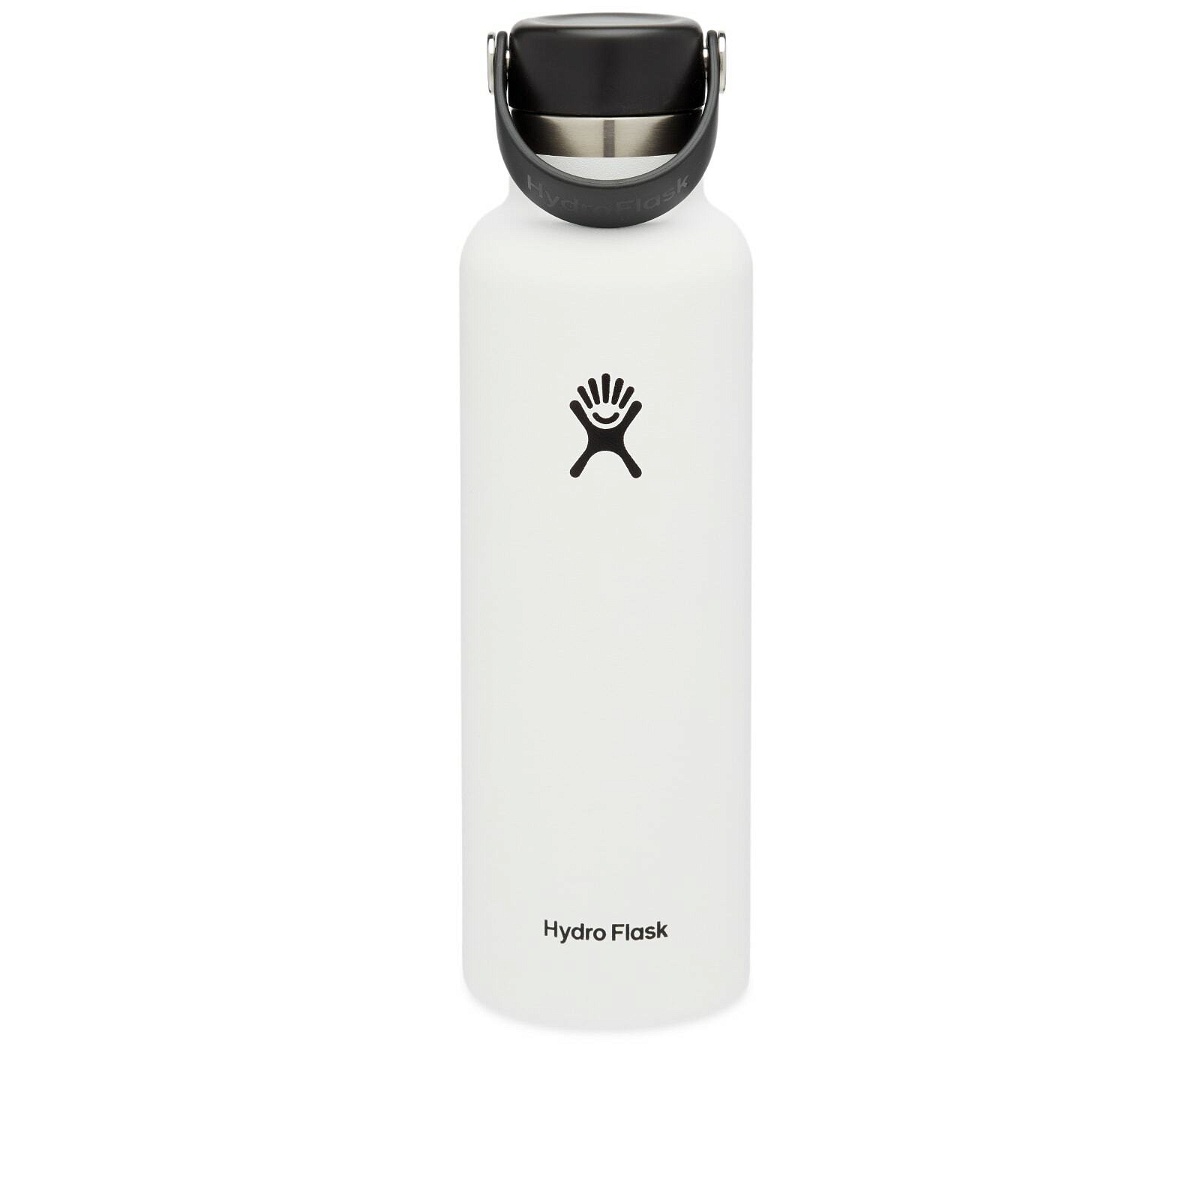 Hydro Flask White Insulated Coffee Mug, 12 oz Hydro Flask